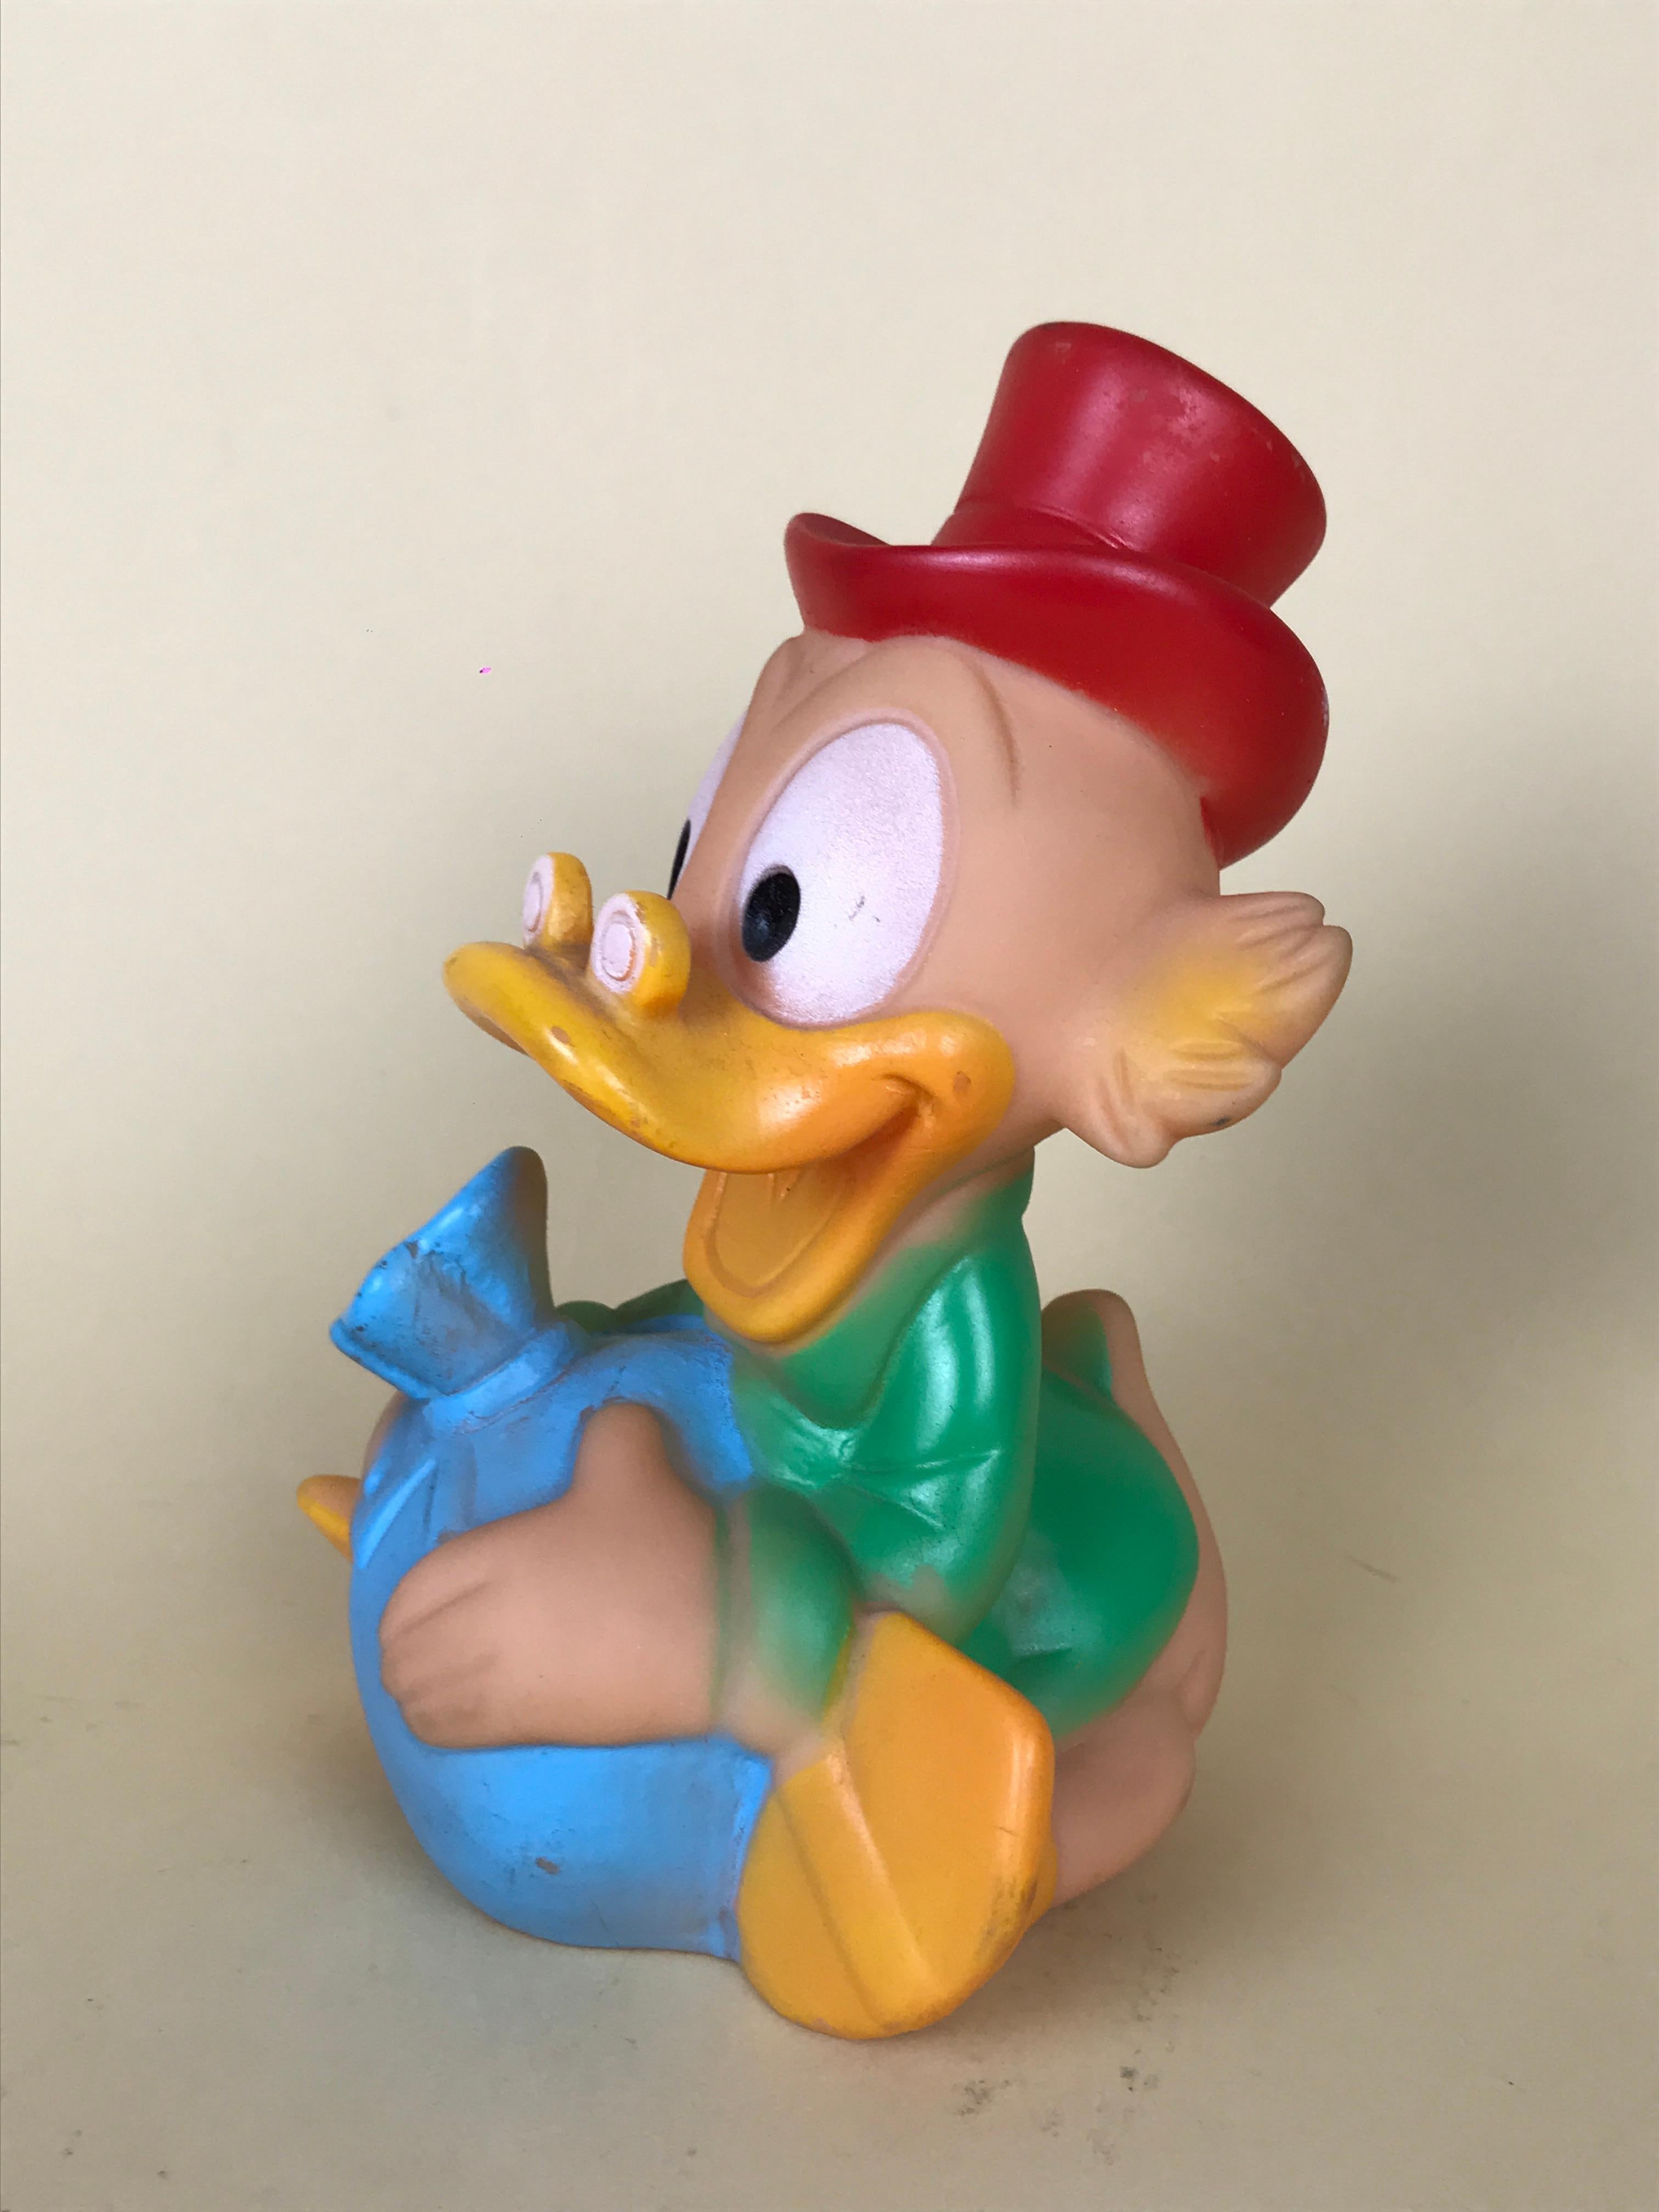 Spanish 1960s Vintage Uncle Scrooge Squeak Toy Made in Spain by Jugasa for Disney